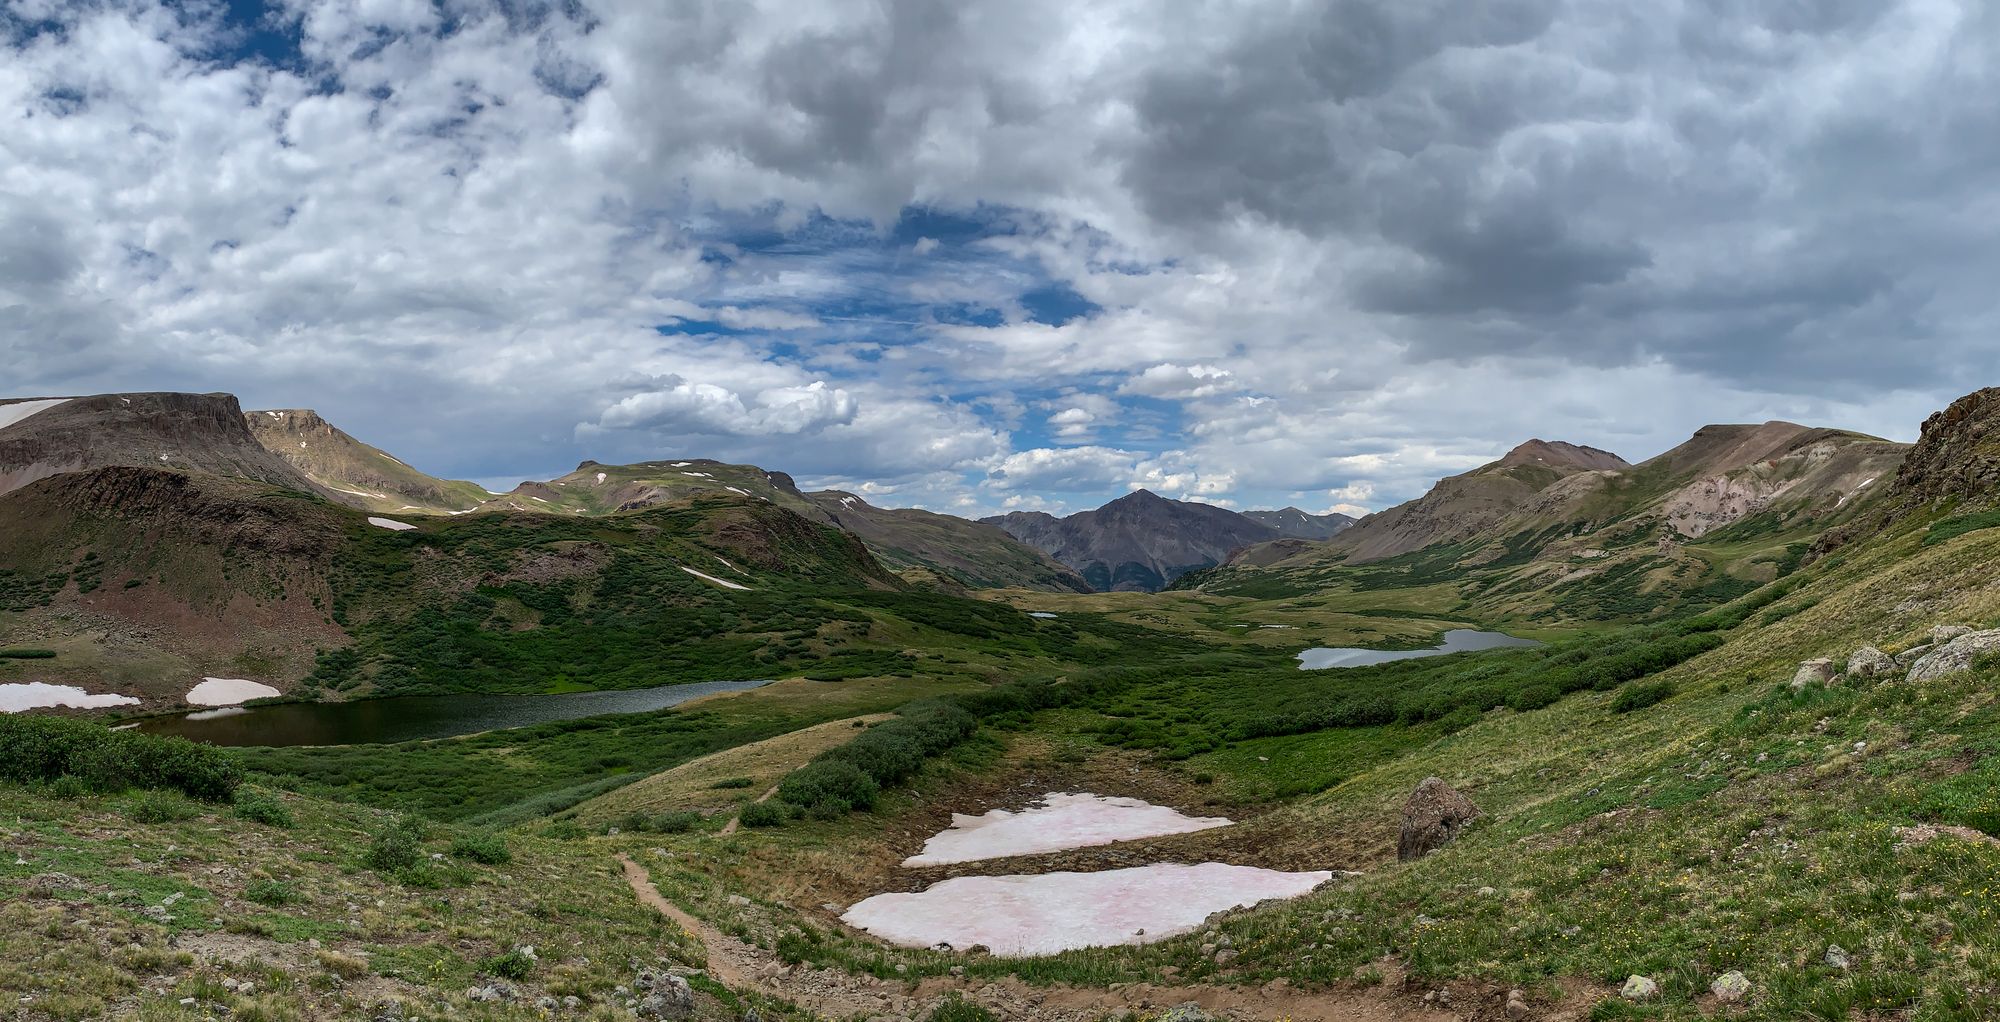 Colorado Trail - napříč Rocky Mountains (3)